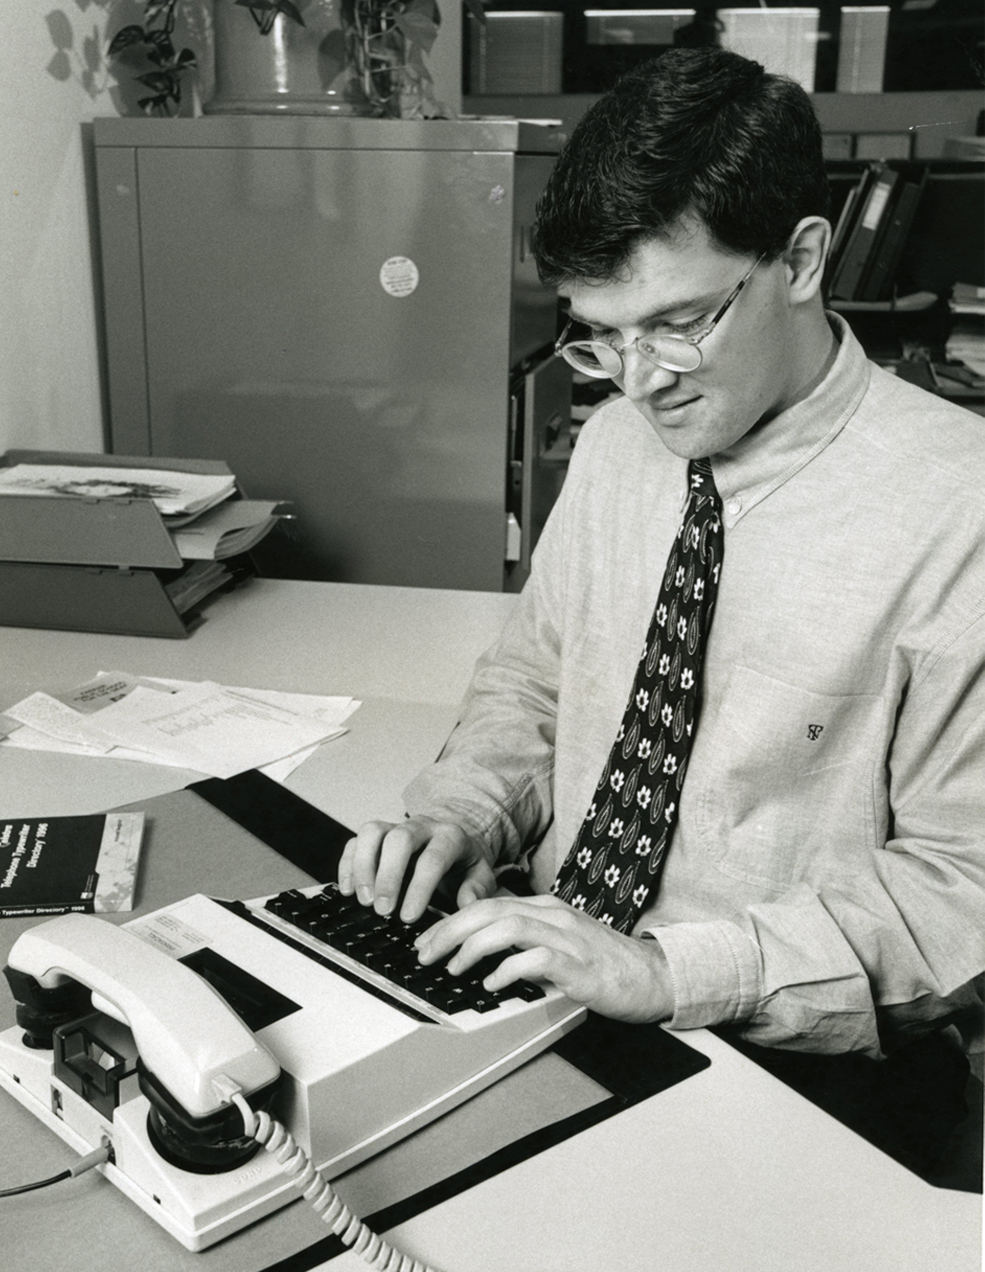   Stephen Nicholson using a TTY, 1990s  